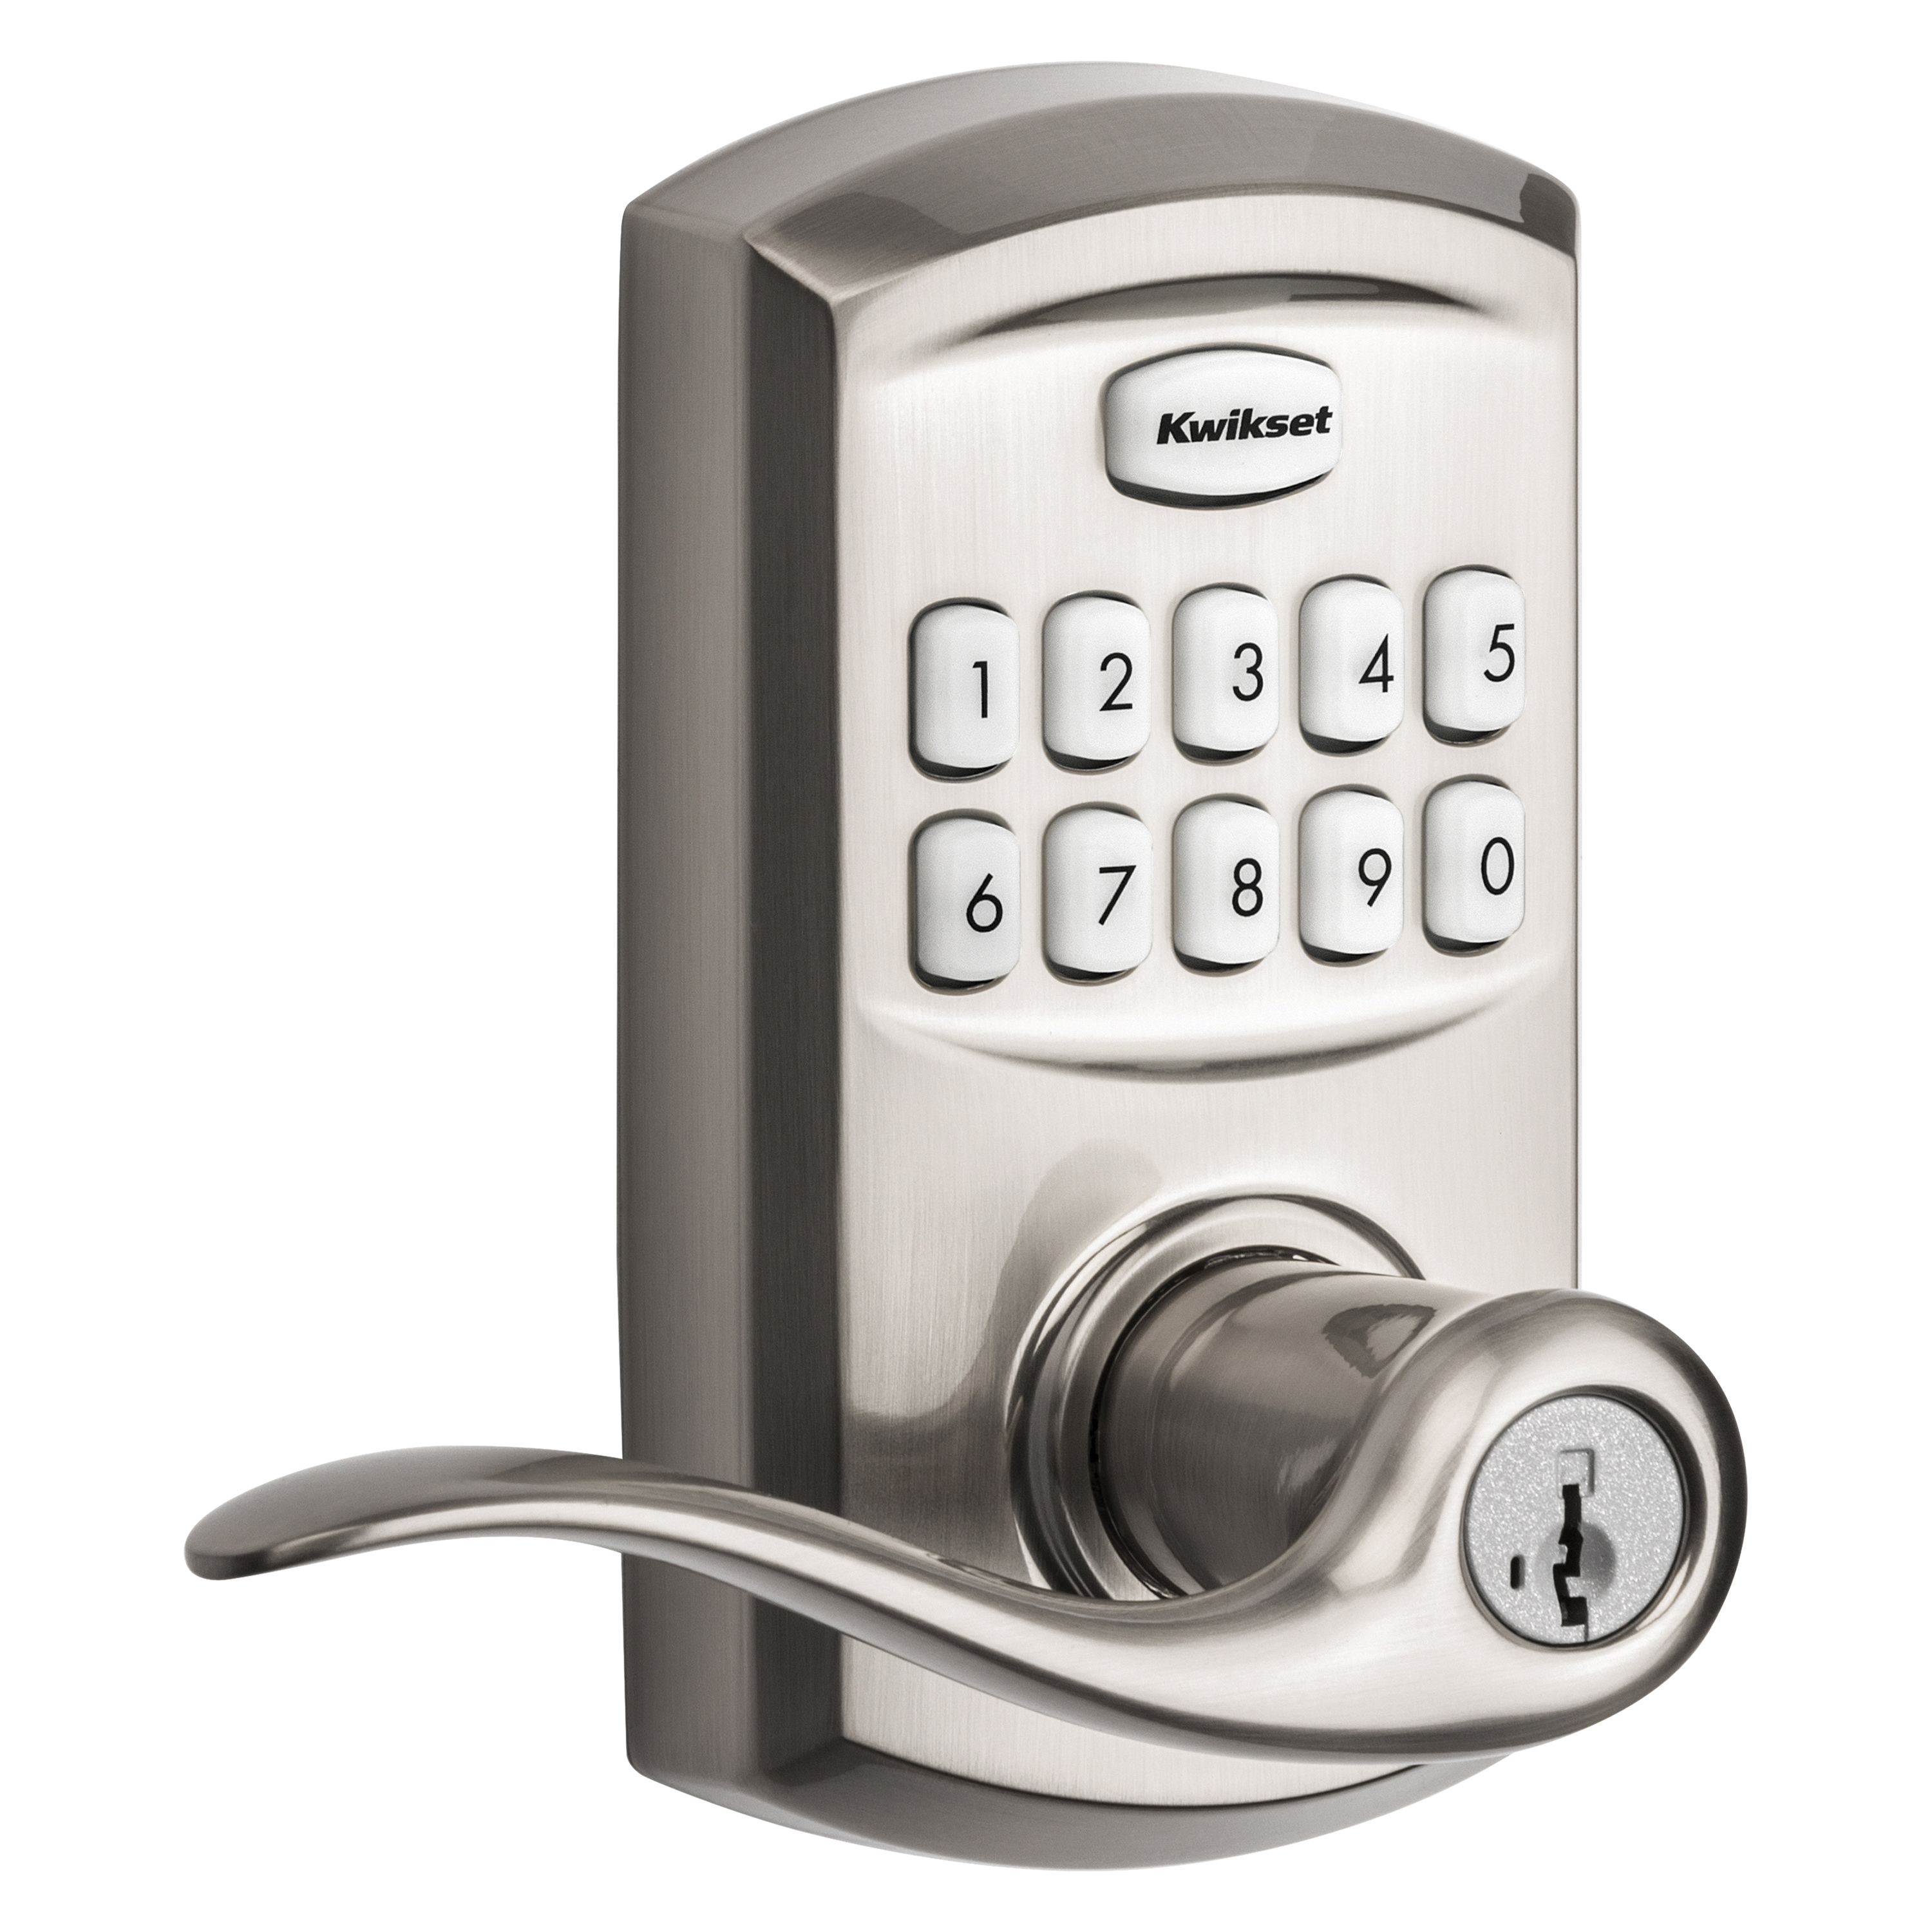 911TNL 15 SMT Electronic Entry Lock, Satin Nickel, Residential, AAA Grade, Metal, Universal Hand